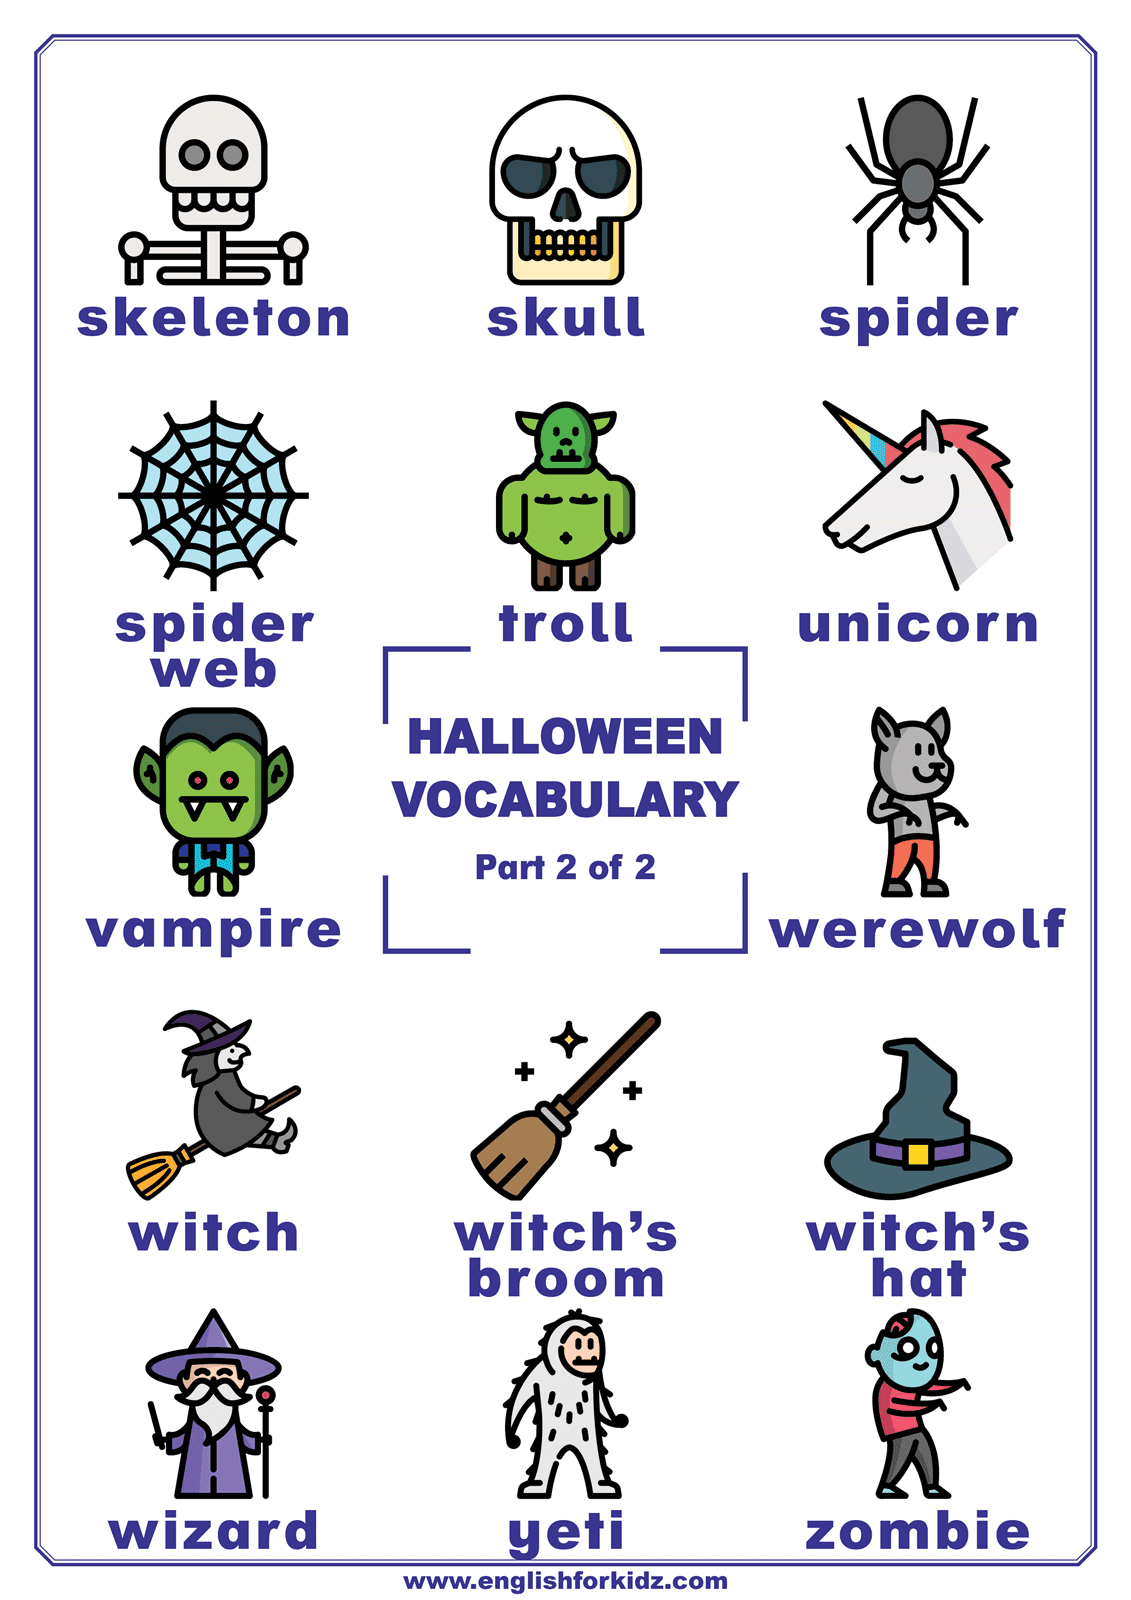 Halloween Vocabulary Posters